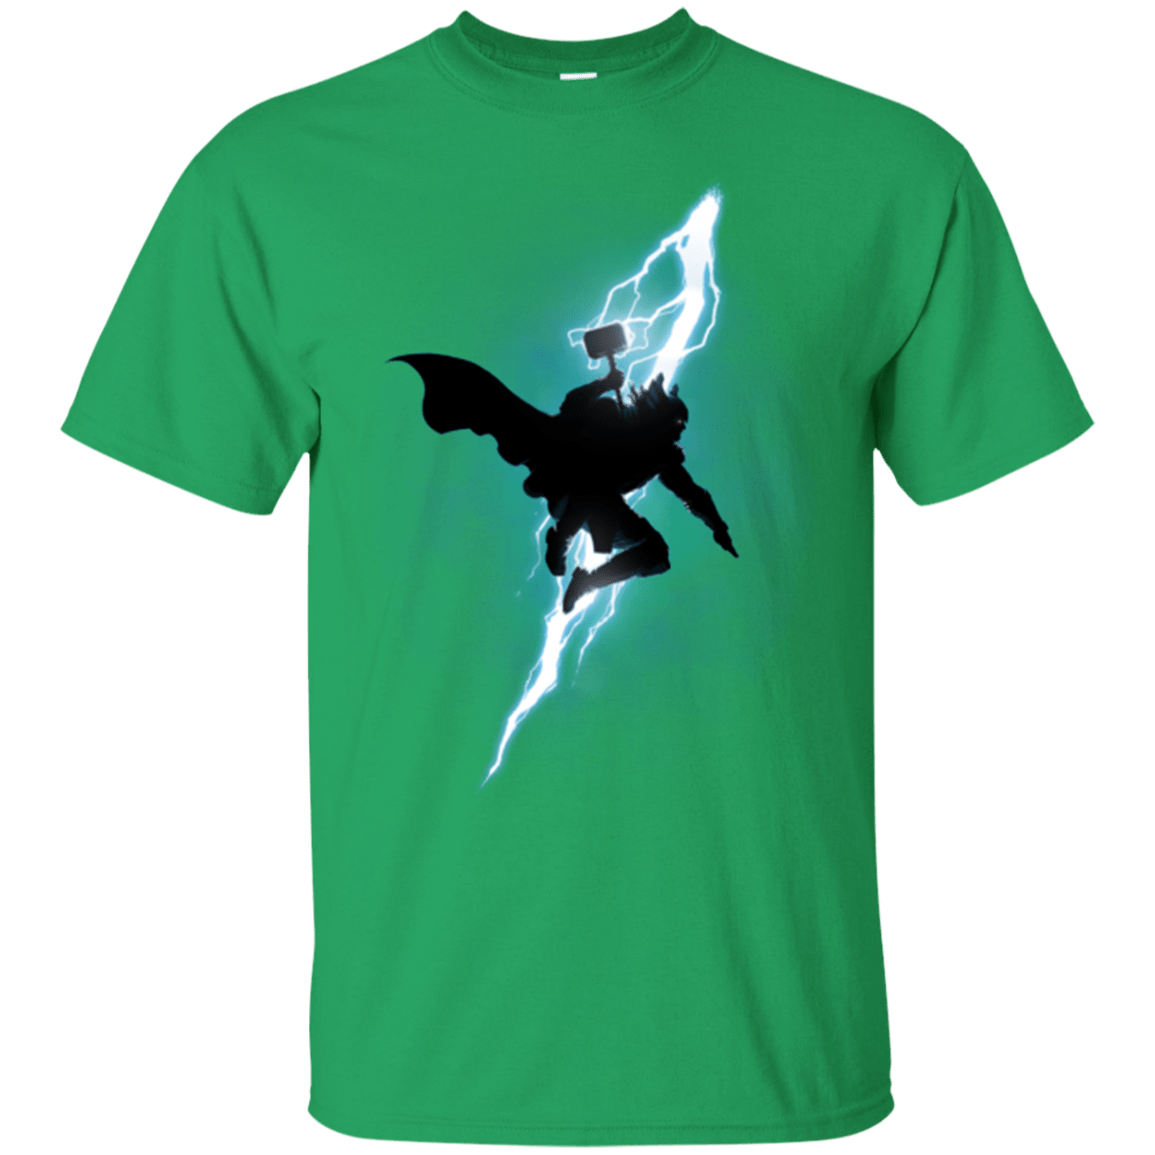 T-Shirts Irish Green / Small The Thunder God Returns T-Shirt